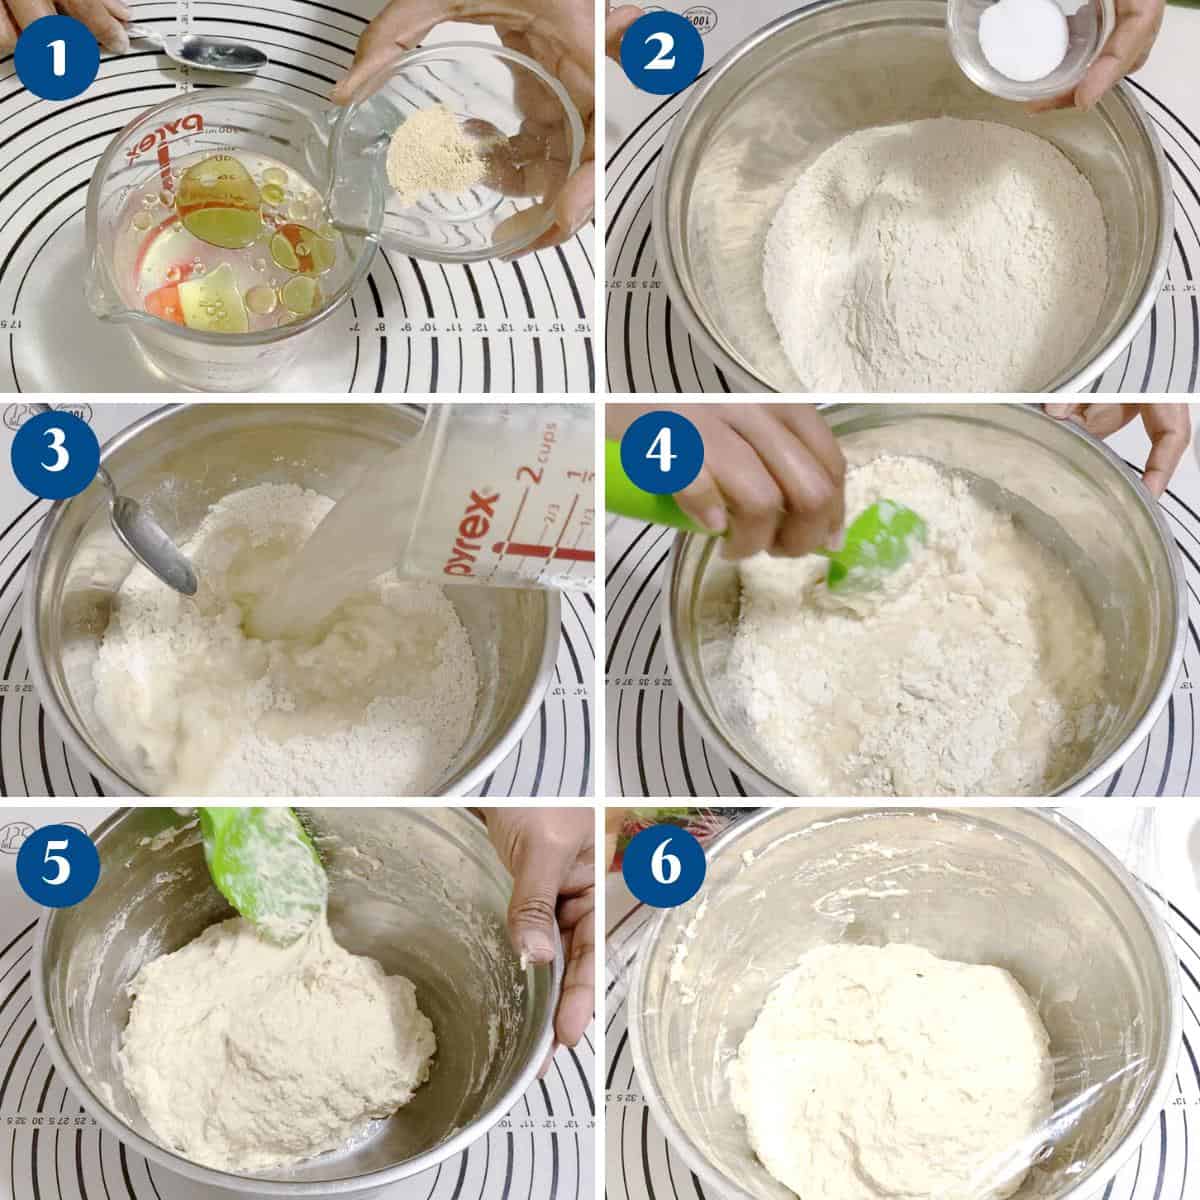 Progress pictures making flatbread dough.